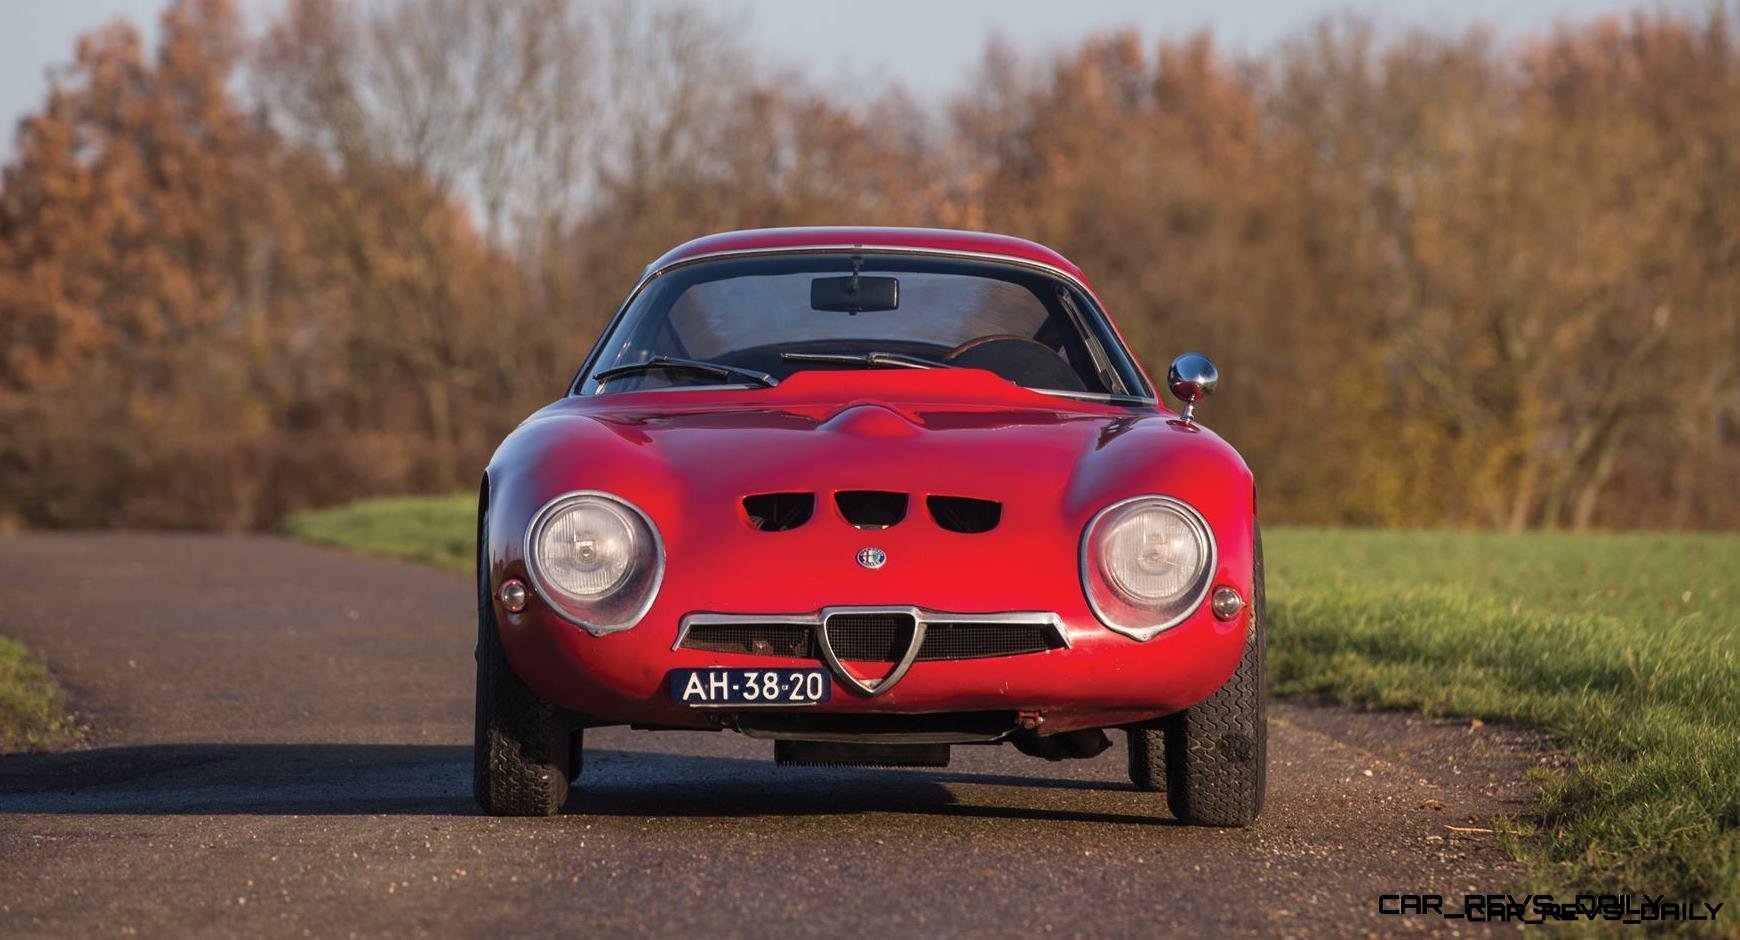 1965 Alfa Romeo Giulia Tubolare Zagato Brings Racing Patina To Rm Sotheby S Paris 16 Car Revs Daily Com